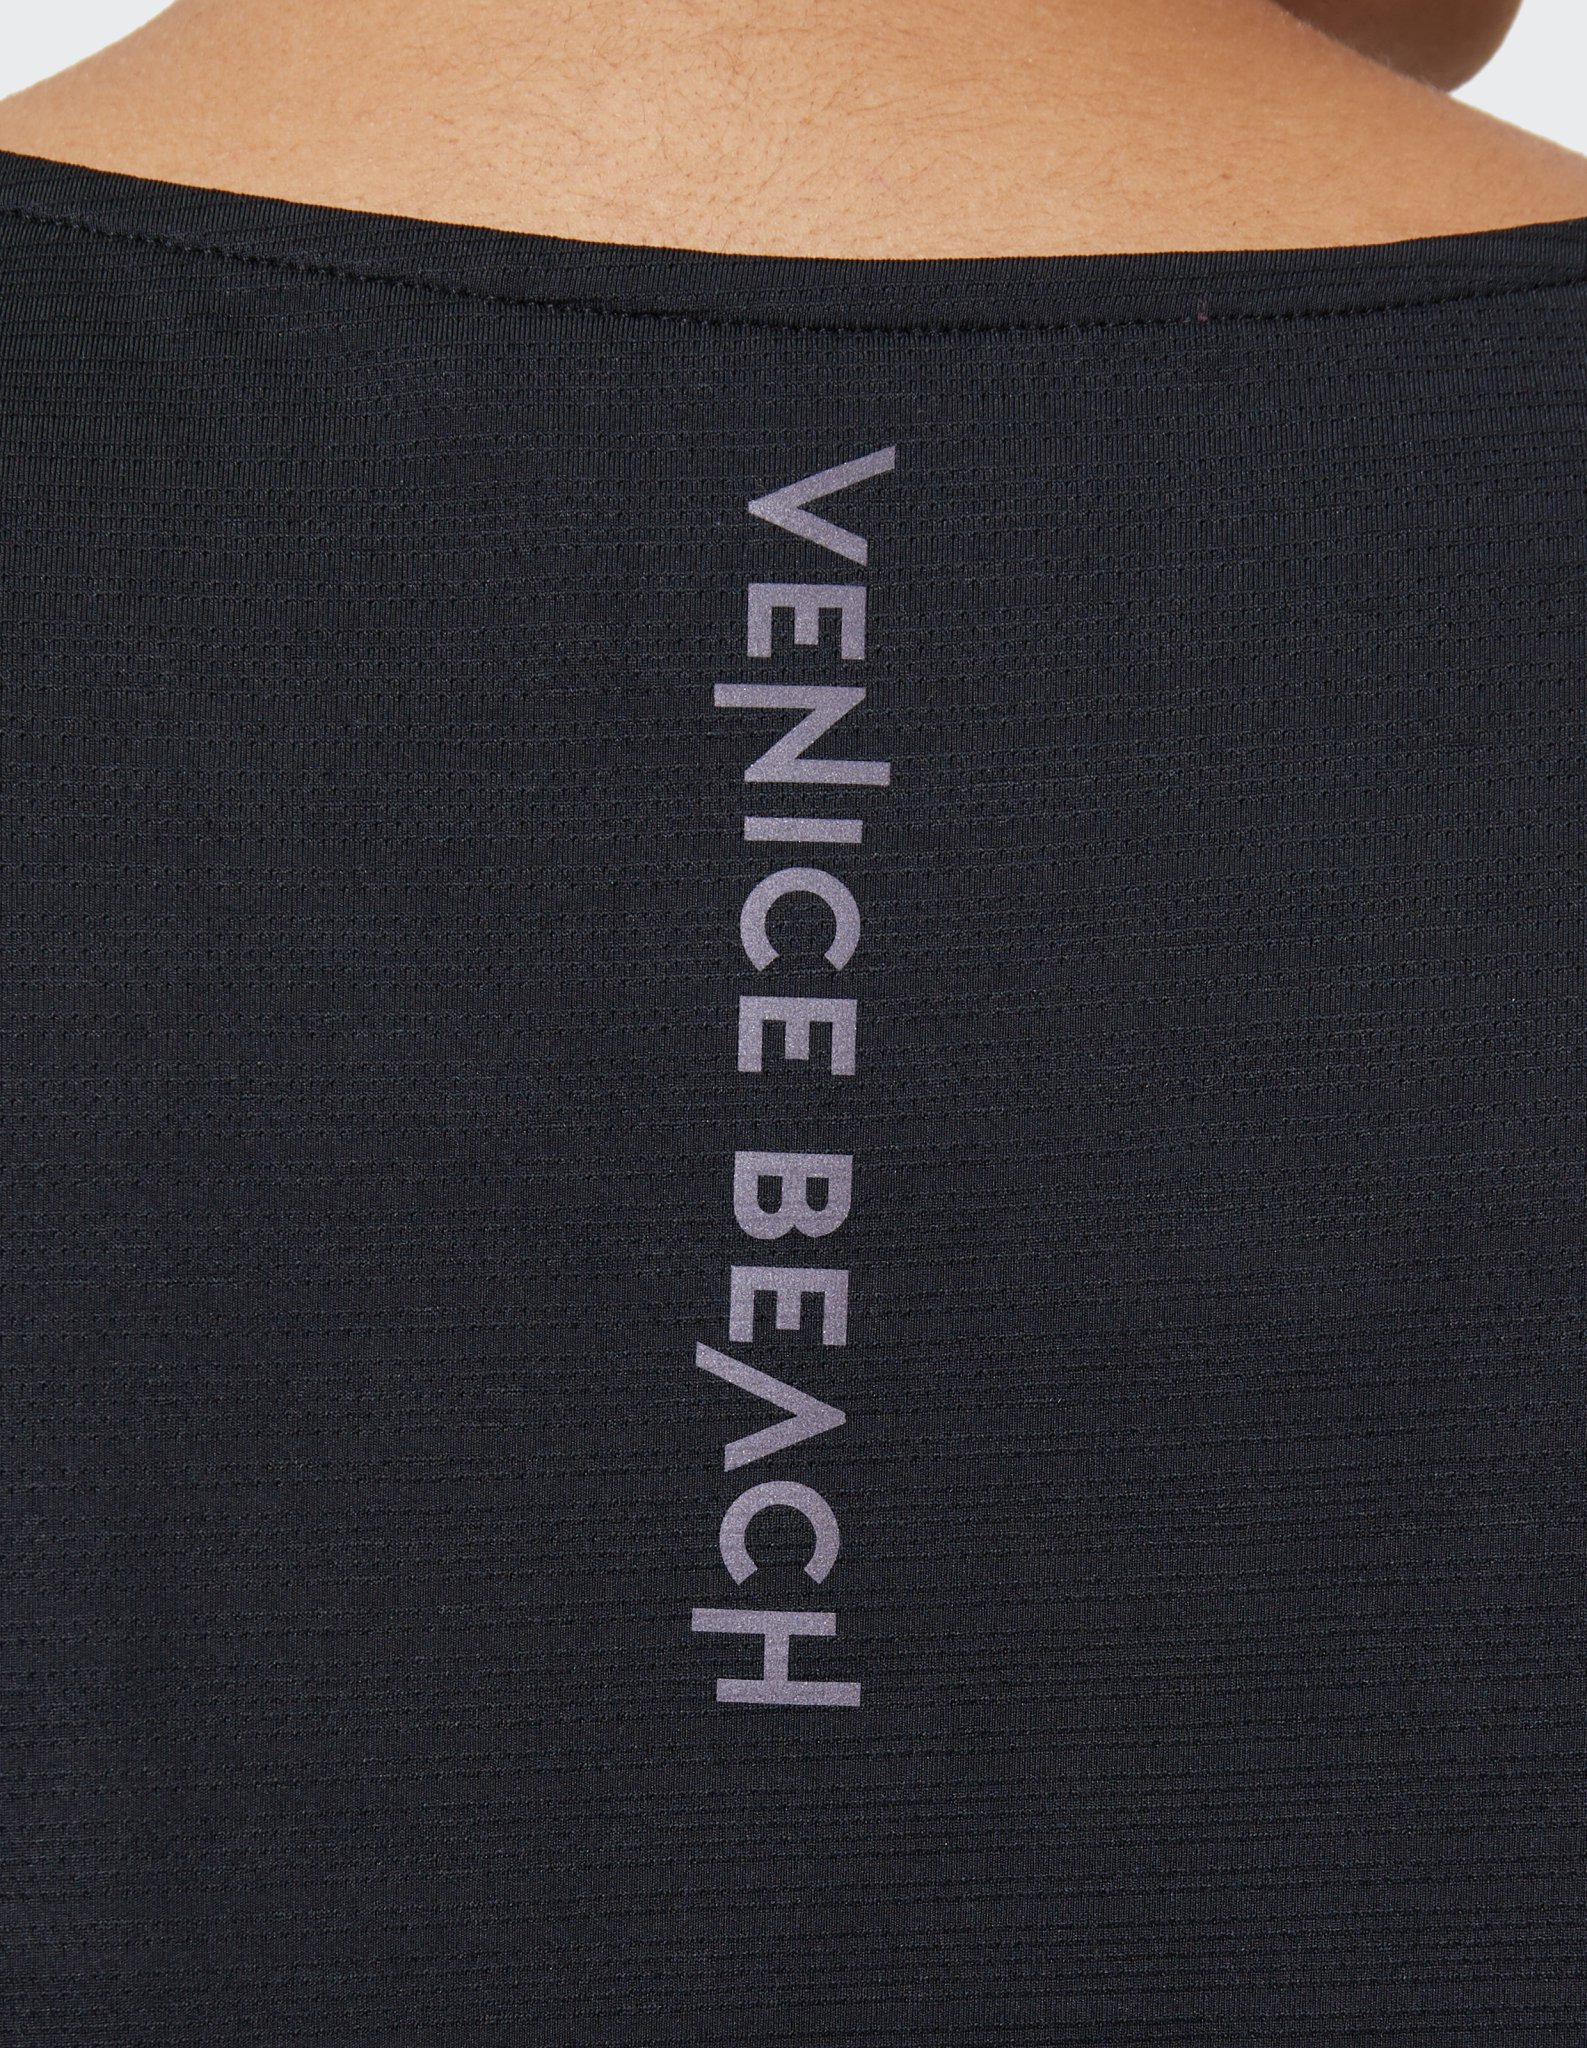 ENNALY | WÖHRL VENICE kaufen T-Shirt BEACH 10719296